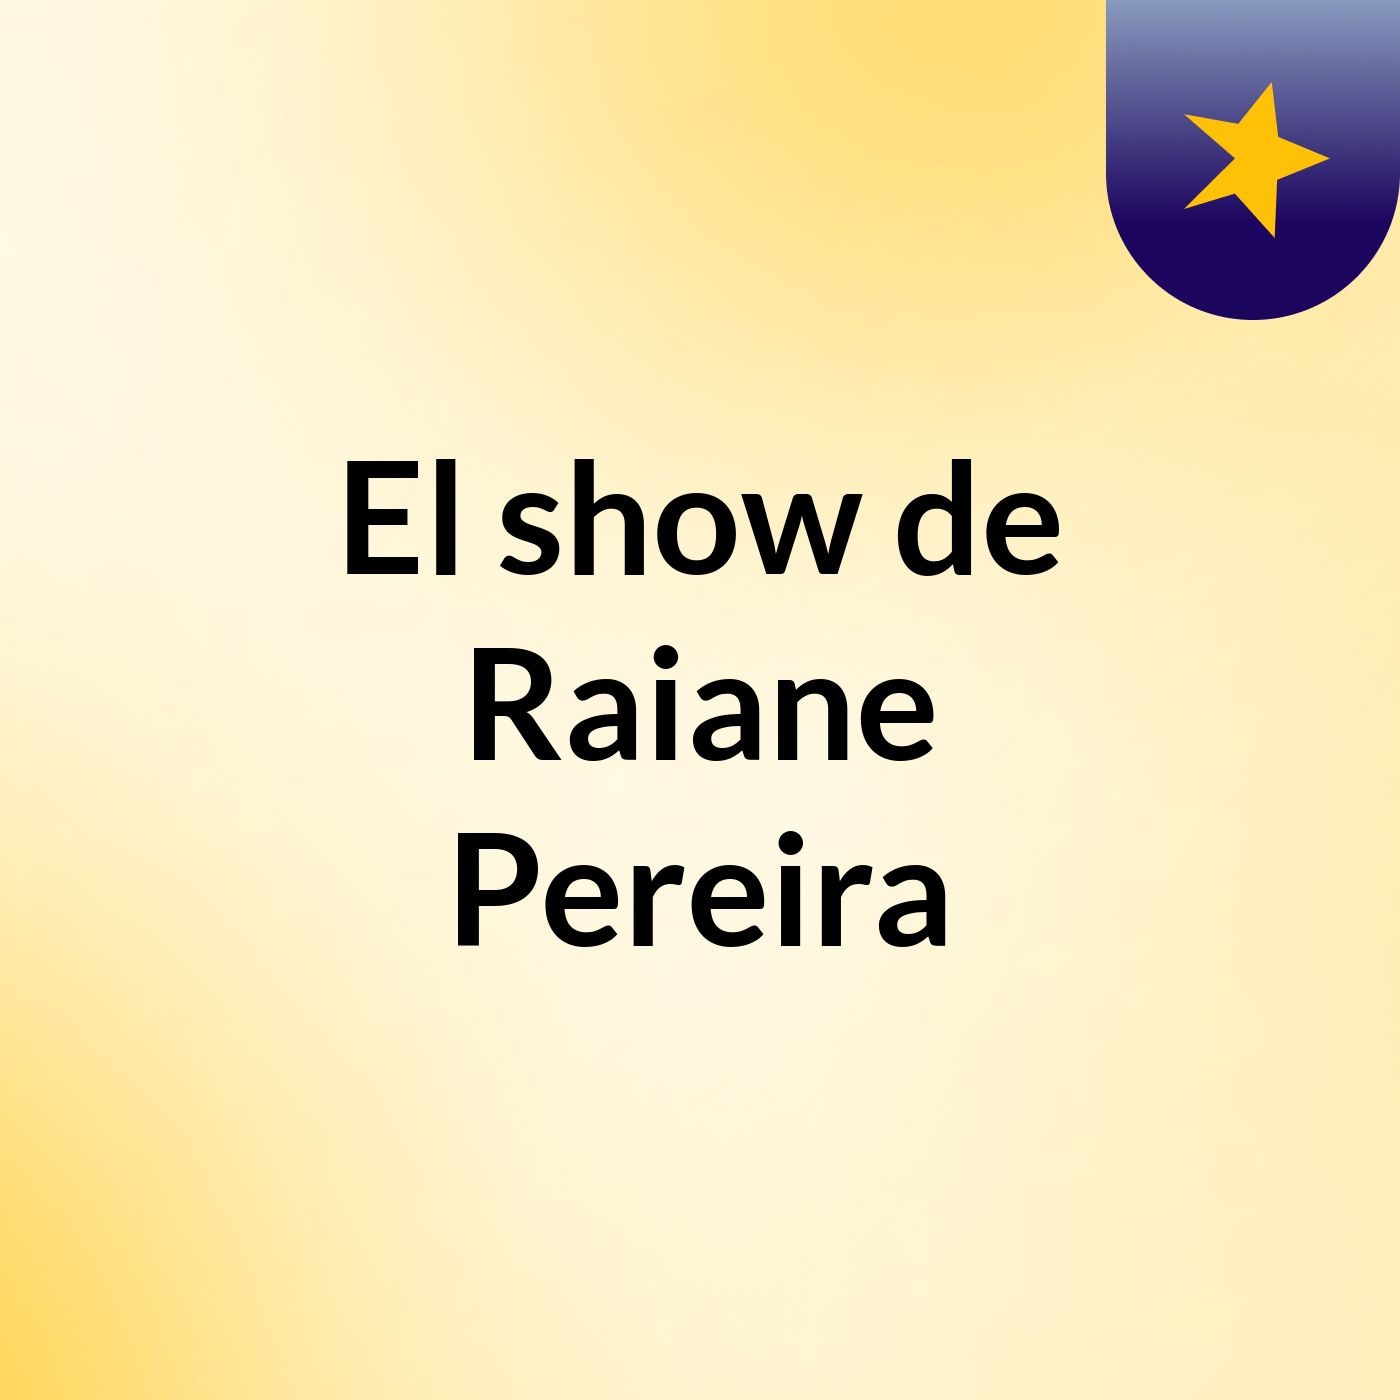 El show de Raiane Pereira